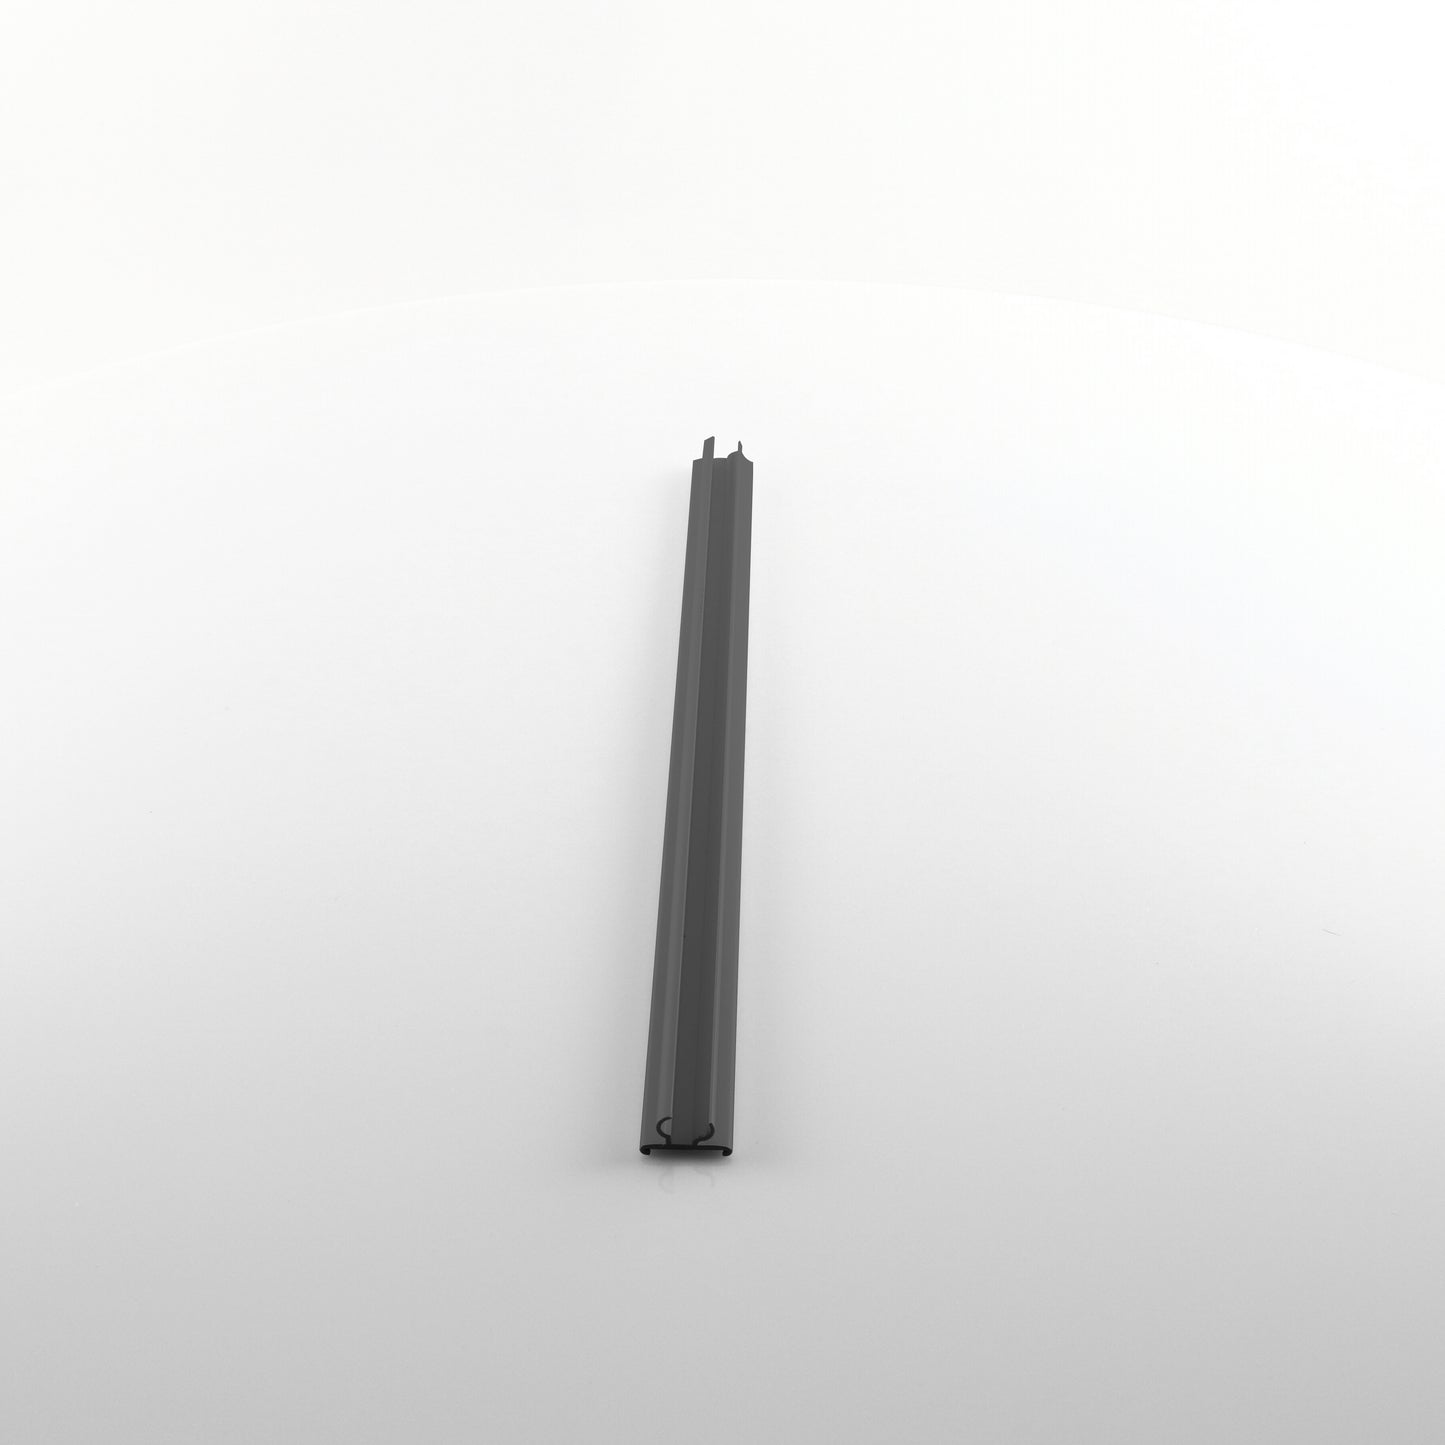 Black Product ID Strip, GDM-47/49/52/69/72, 23-1/32" Length(SKU - 916289)